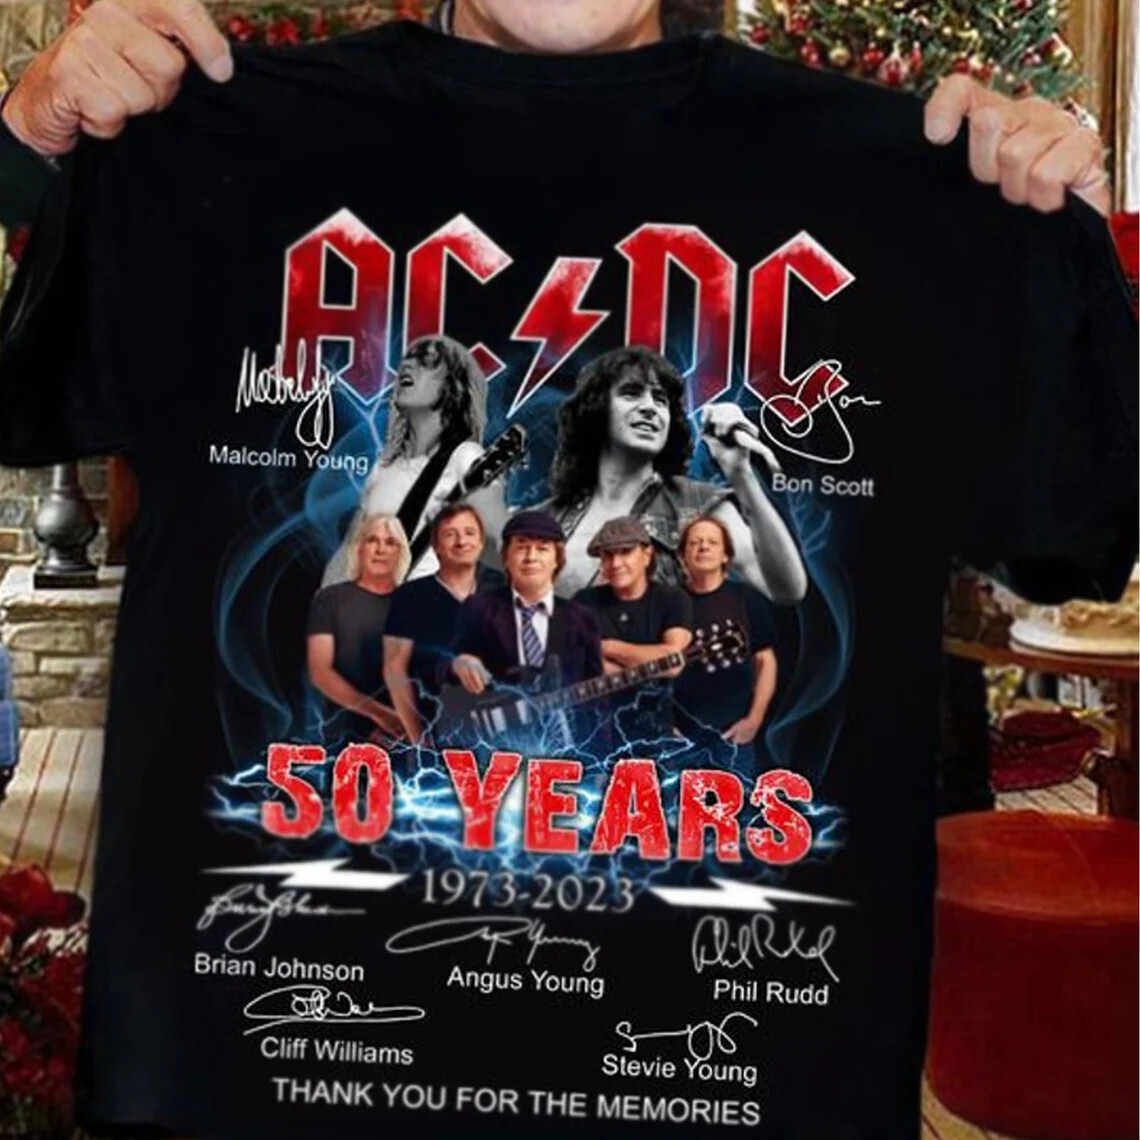 Acdc Shirt Favorite Song Shirt Acdc 50 Years Anniversary Shirt Acdc 50 Years Shirt The Memories Shirt Music Shirt Thank You Shirt